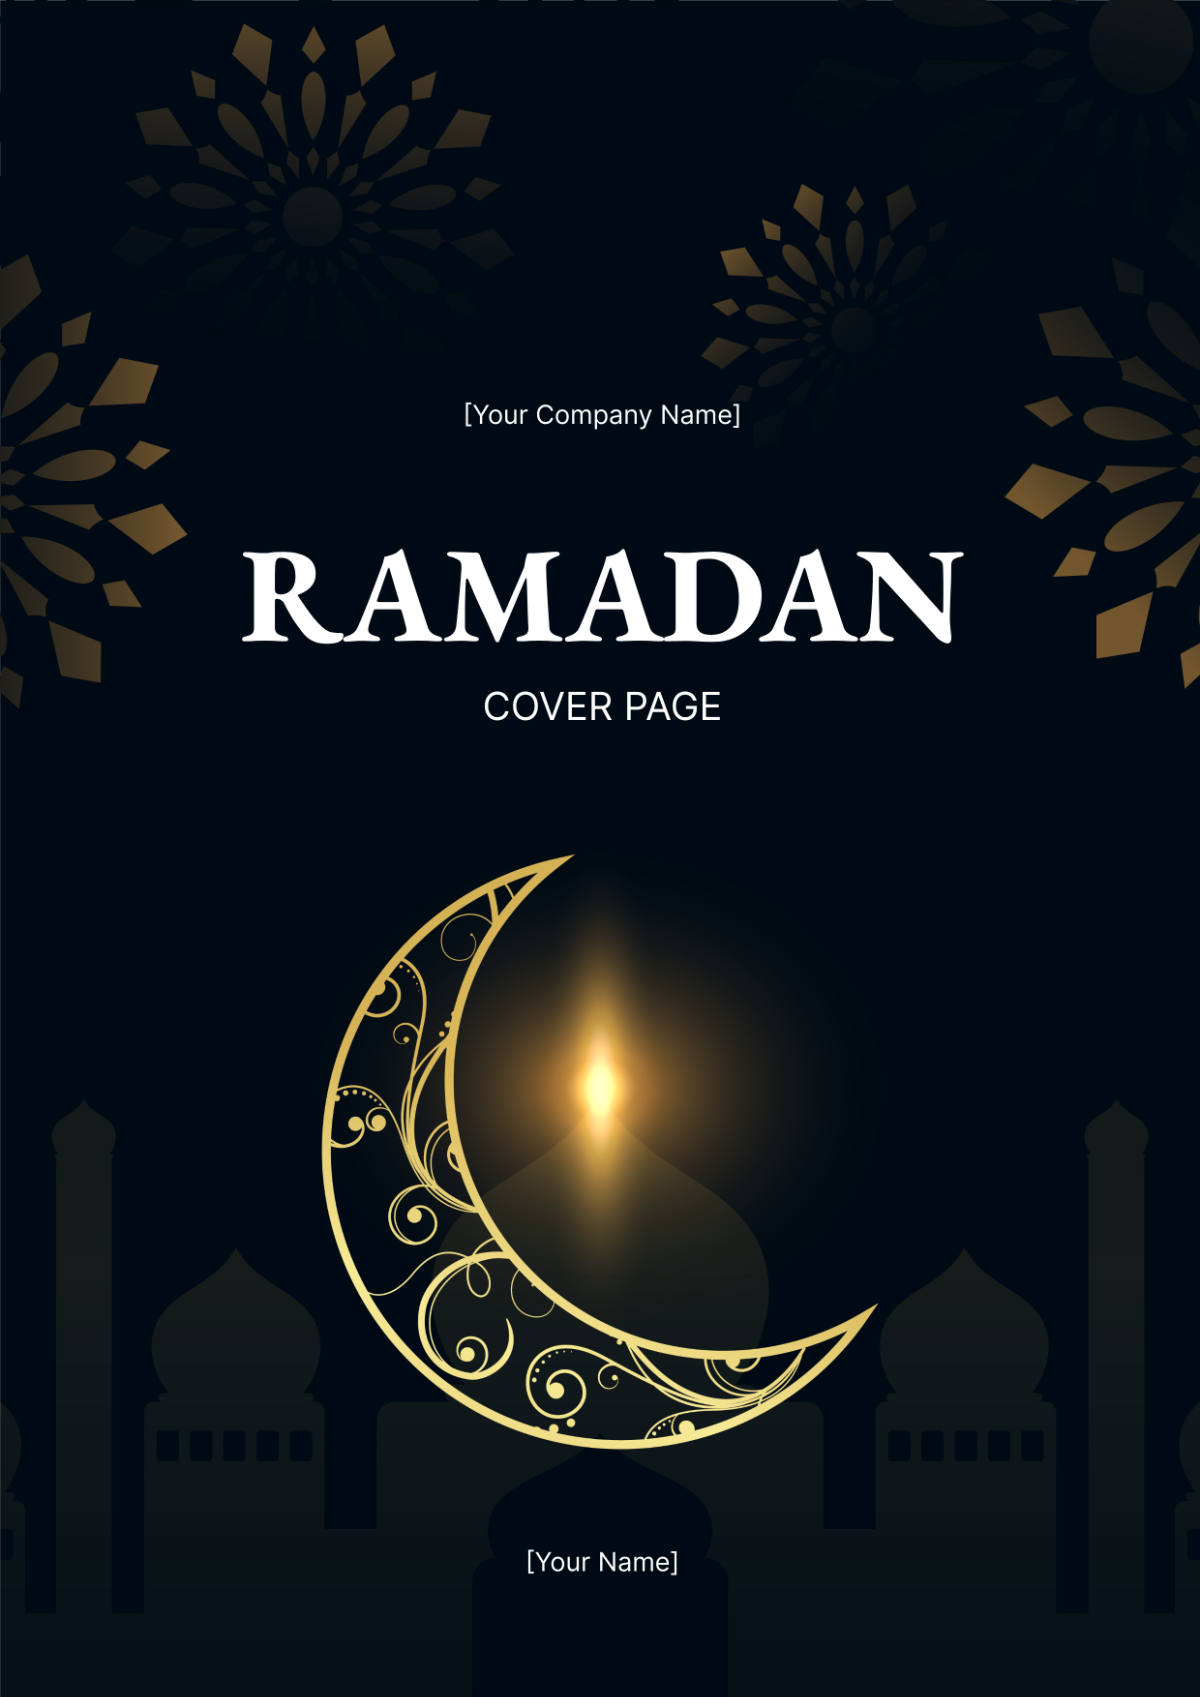 Ramadan Cover Page